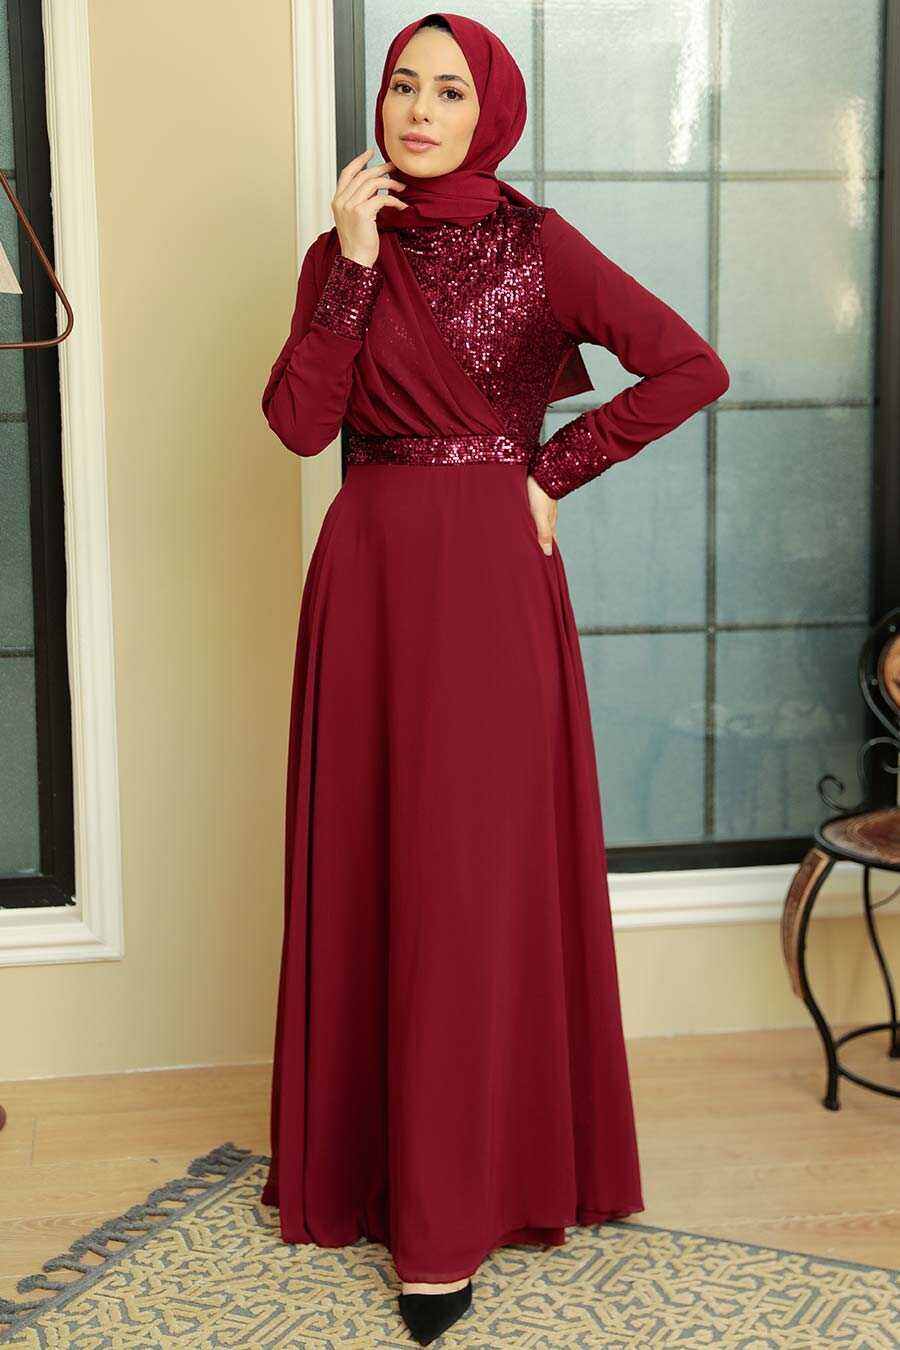 Neva Style - Long Sleeve Claret Red Muslim Bridal Dress 5793BR